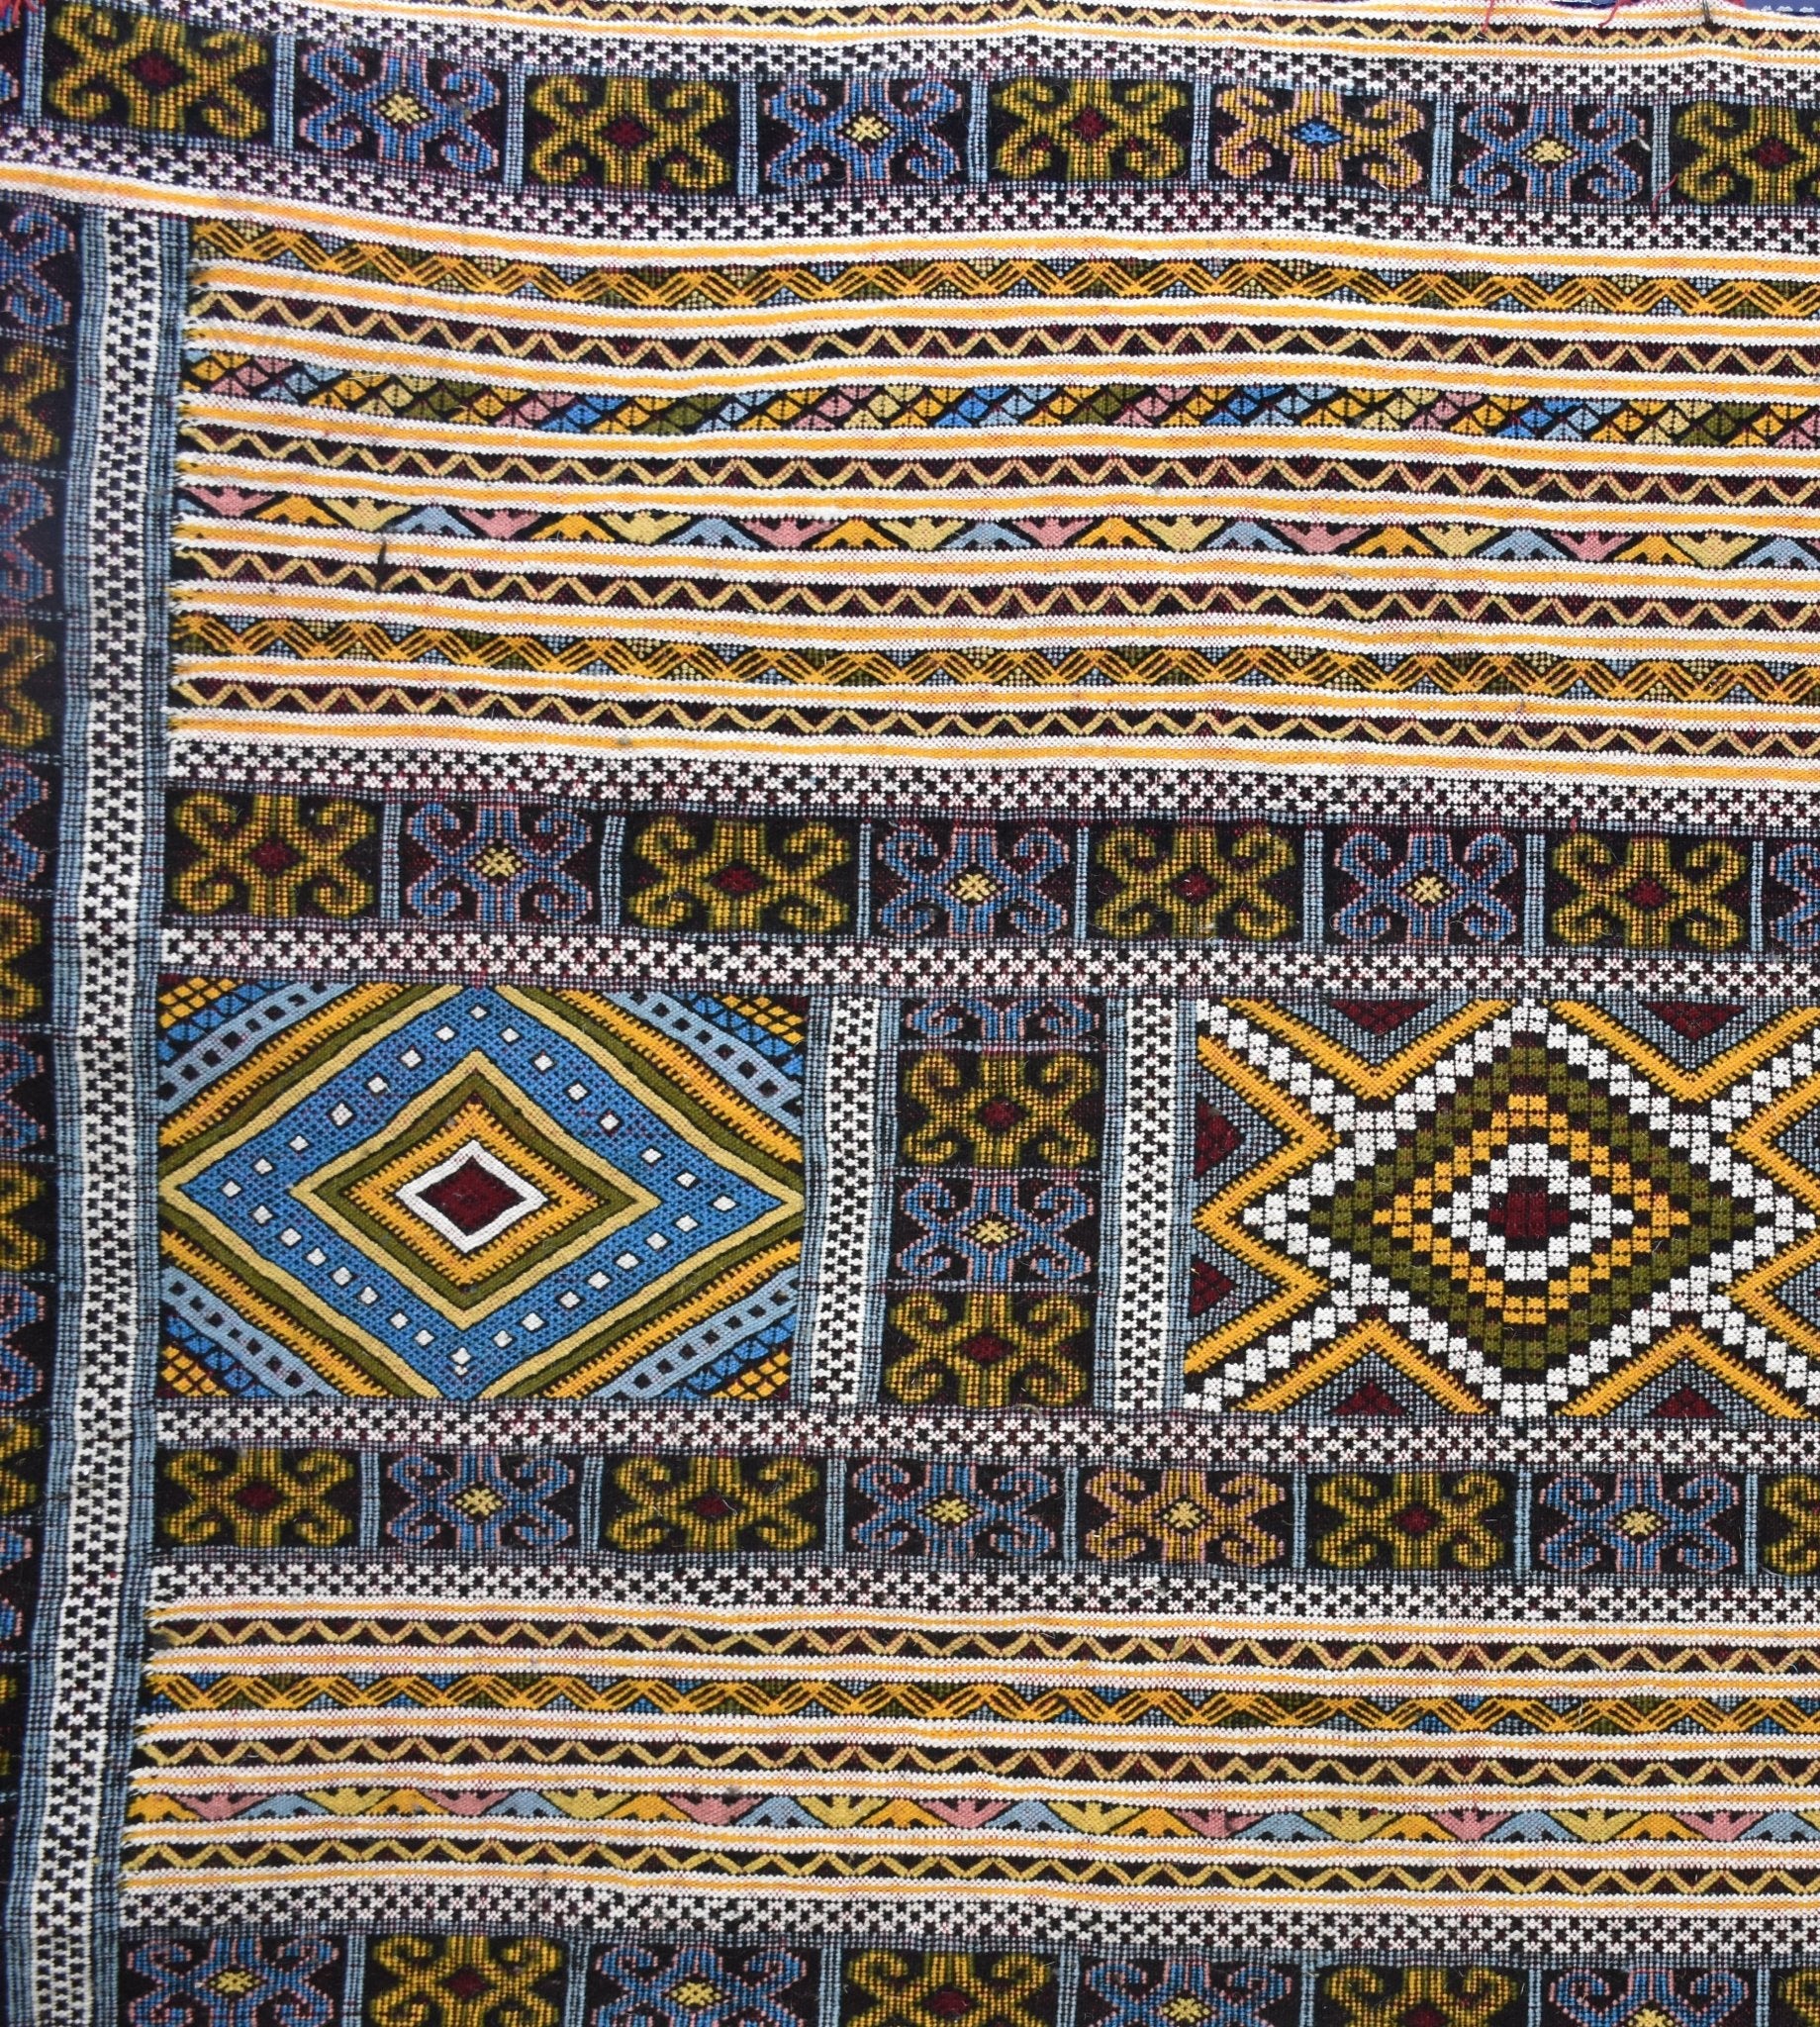 Flatweave kilim hanbal Moroccan rug - 6.9 x 9.85 ft / 210 x 300 cm - Berbers Market